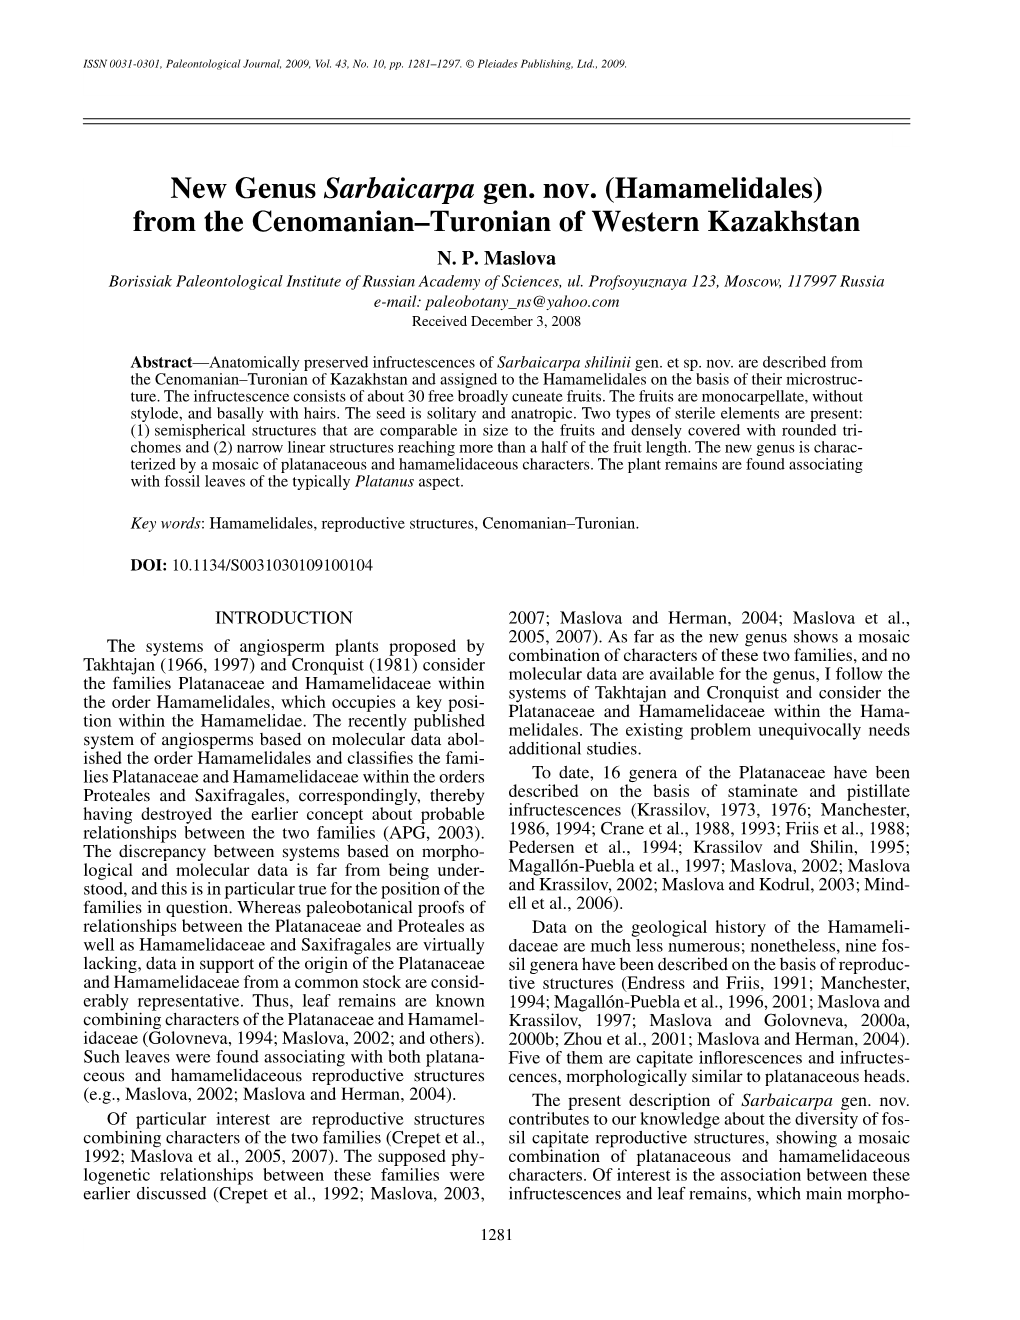 New Genus Sarbaicarpa Gen. Nov. (Hamamelidales) from the Cenomanianðturonian of Western Kazakhstan N